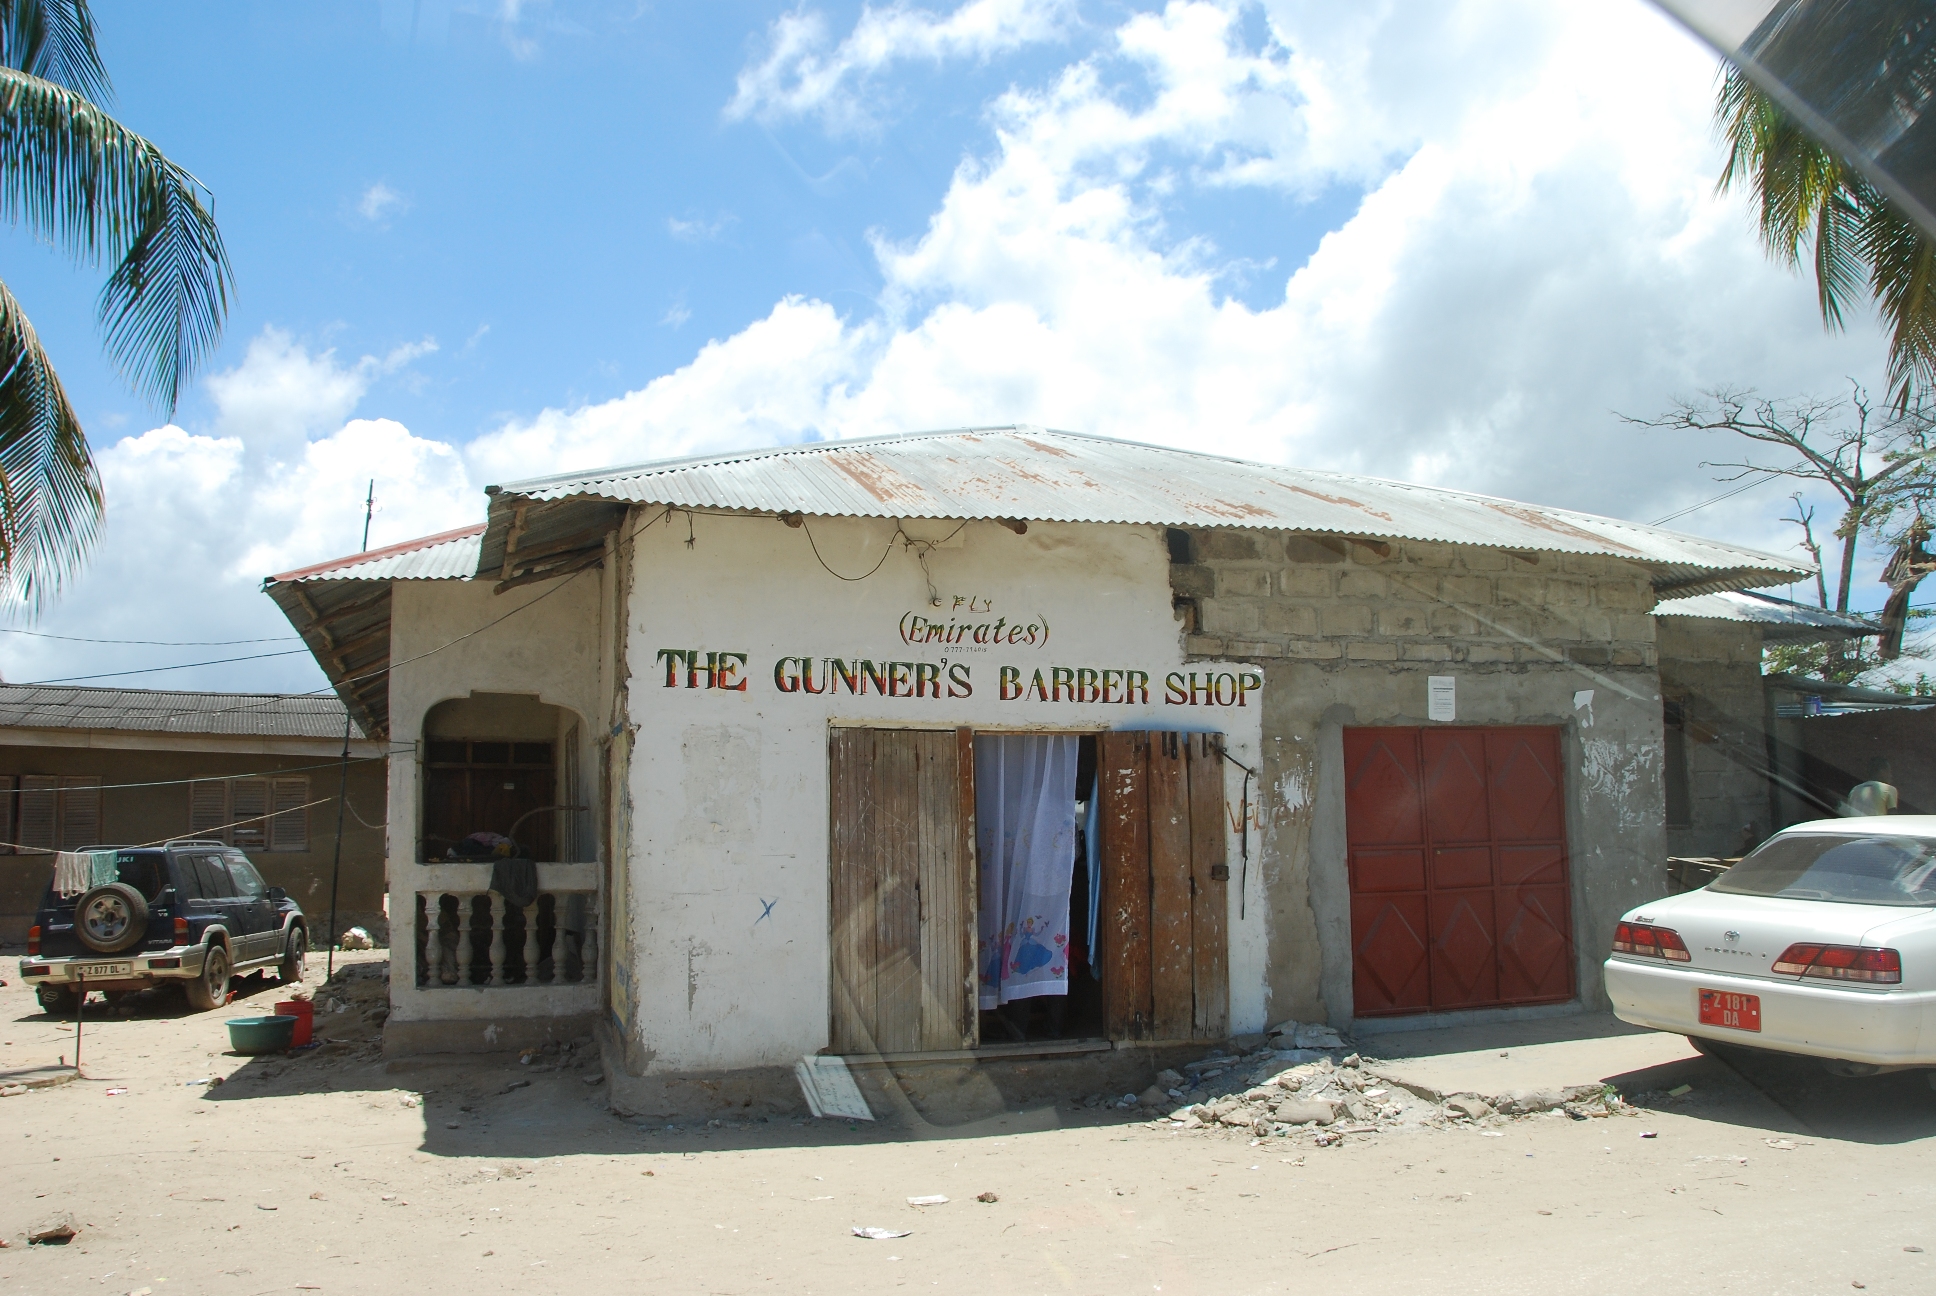 Fly Emirates – The Gunner’s Barber Shop @ Zanzibar